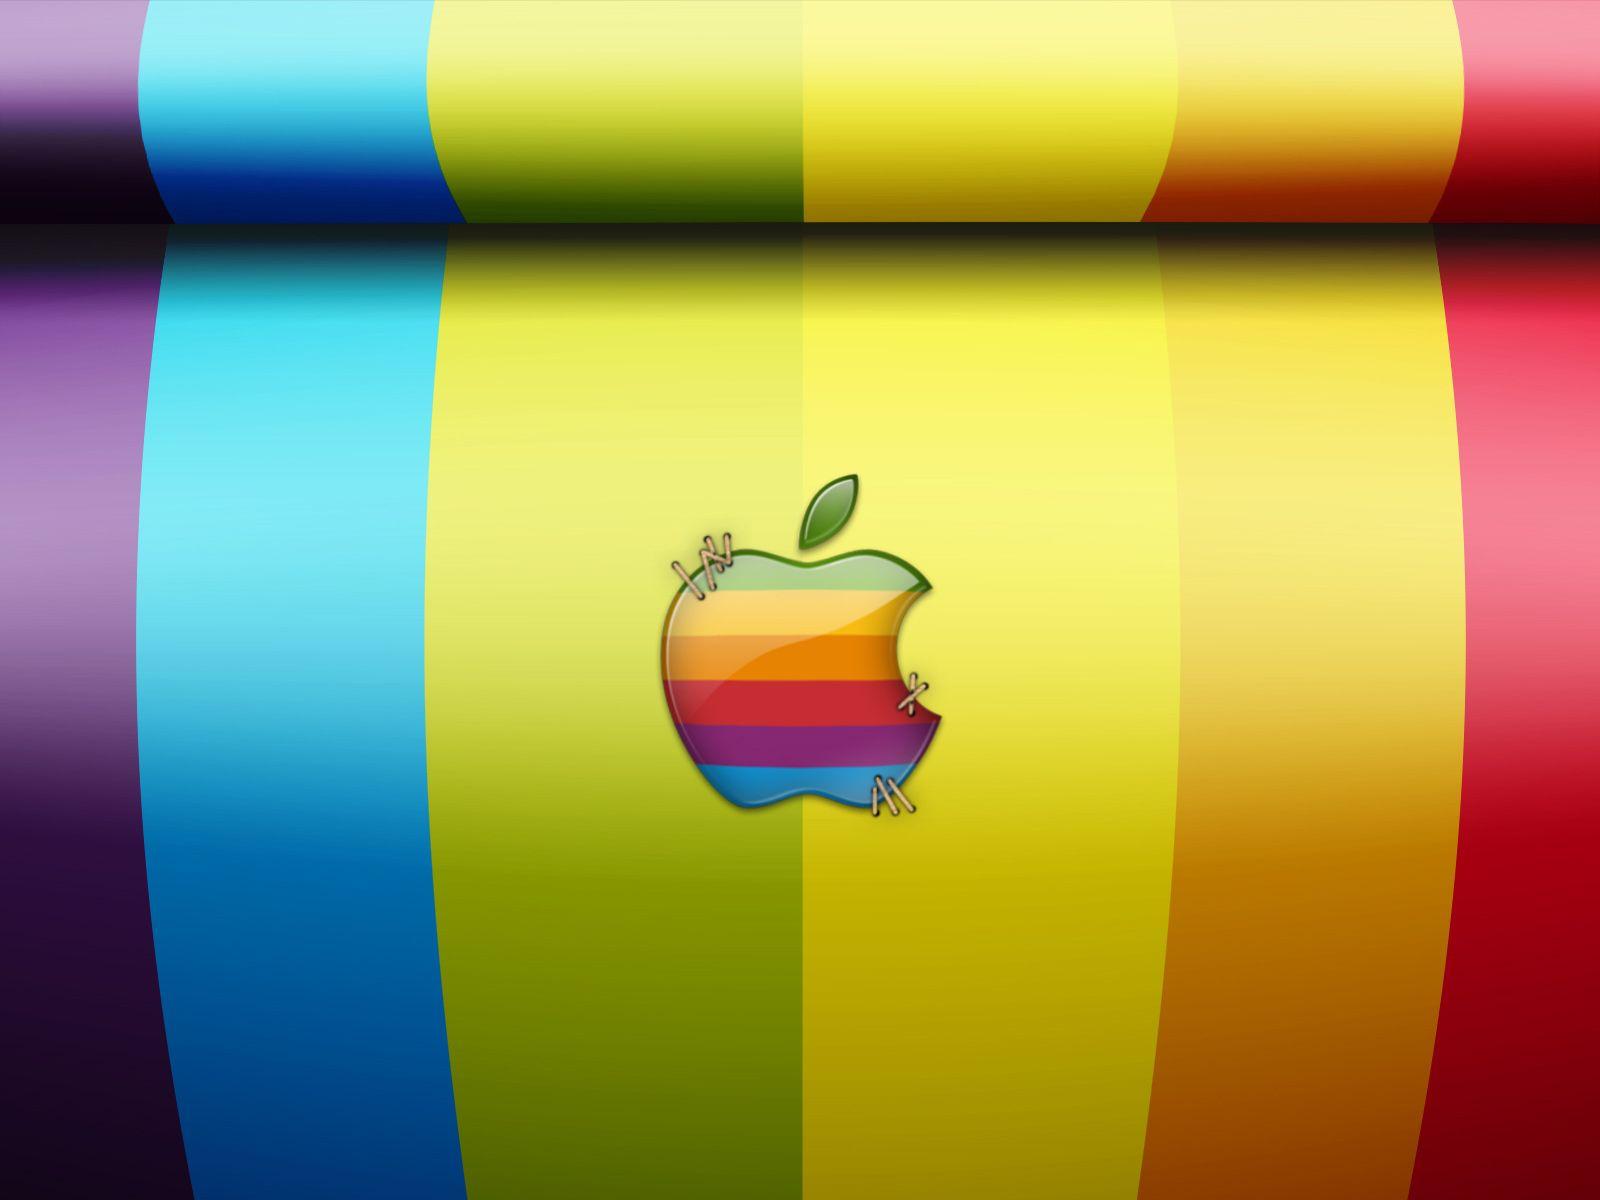 Desktop Wallpaper · Gallery · Computers · Apple OS. Free